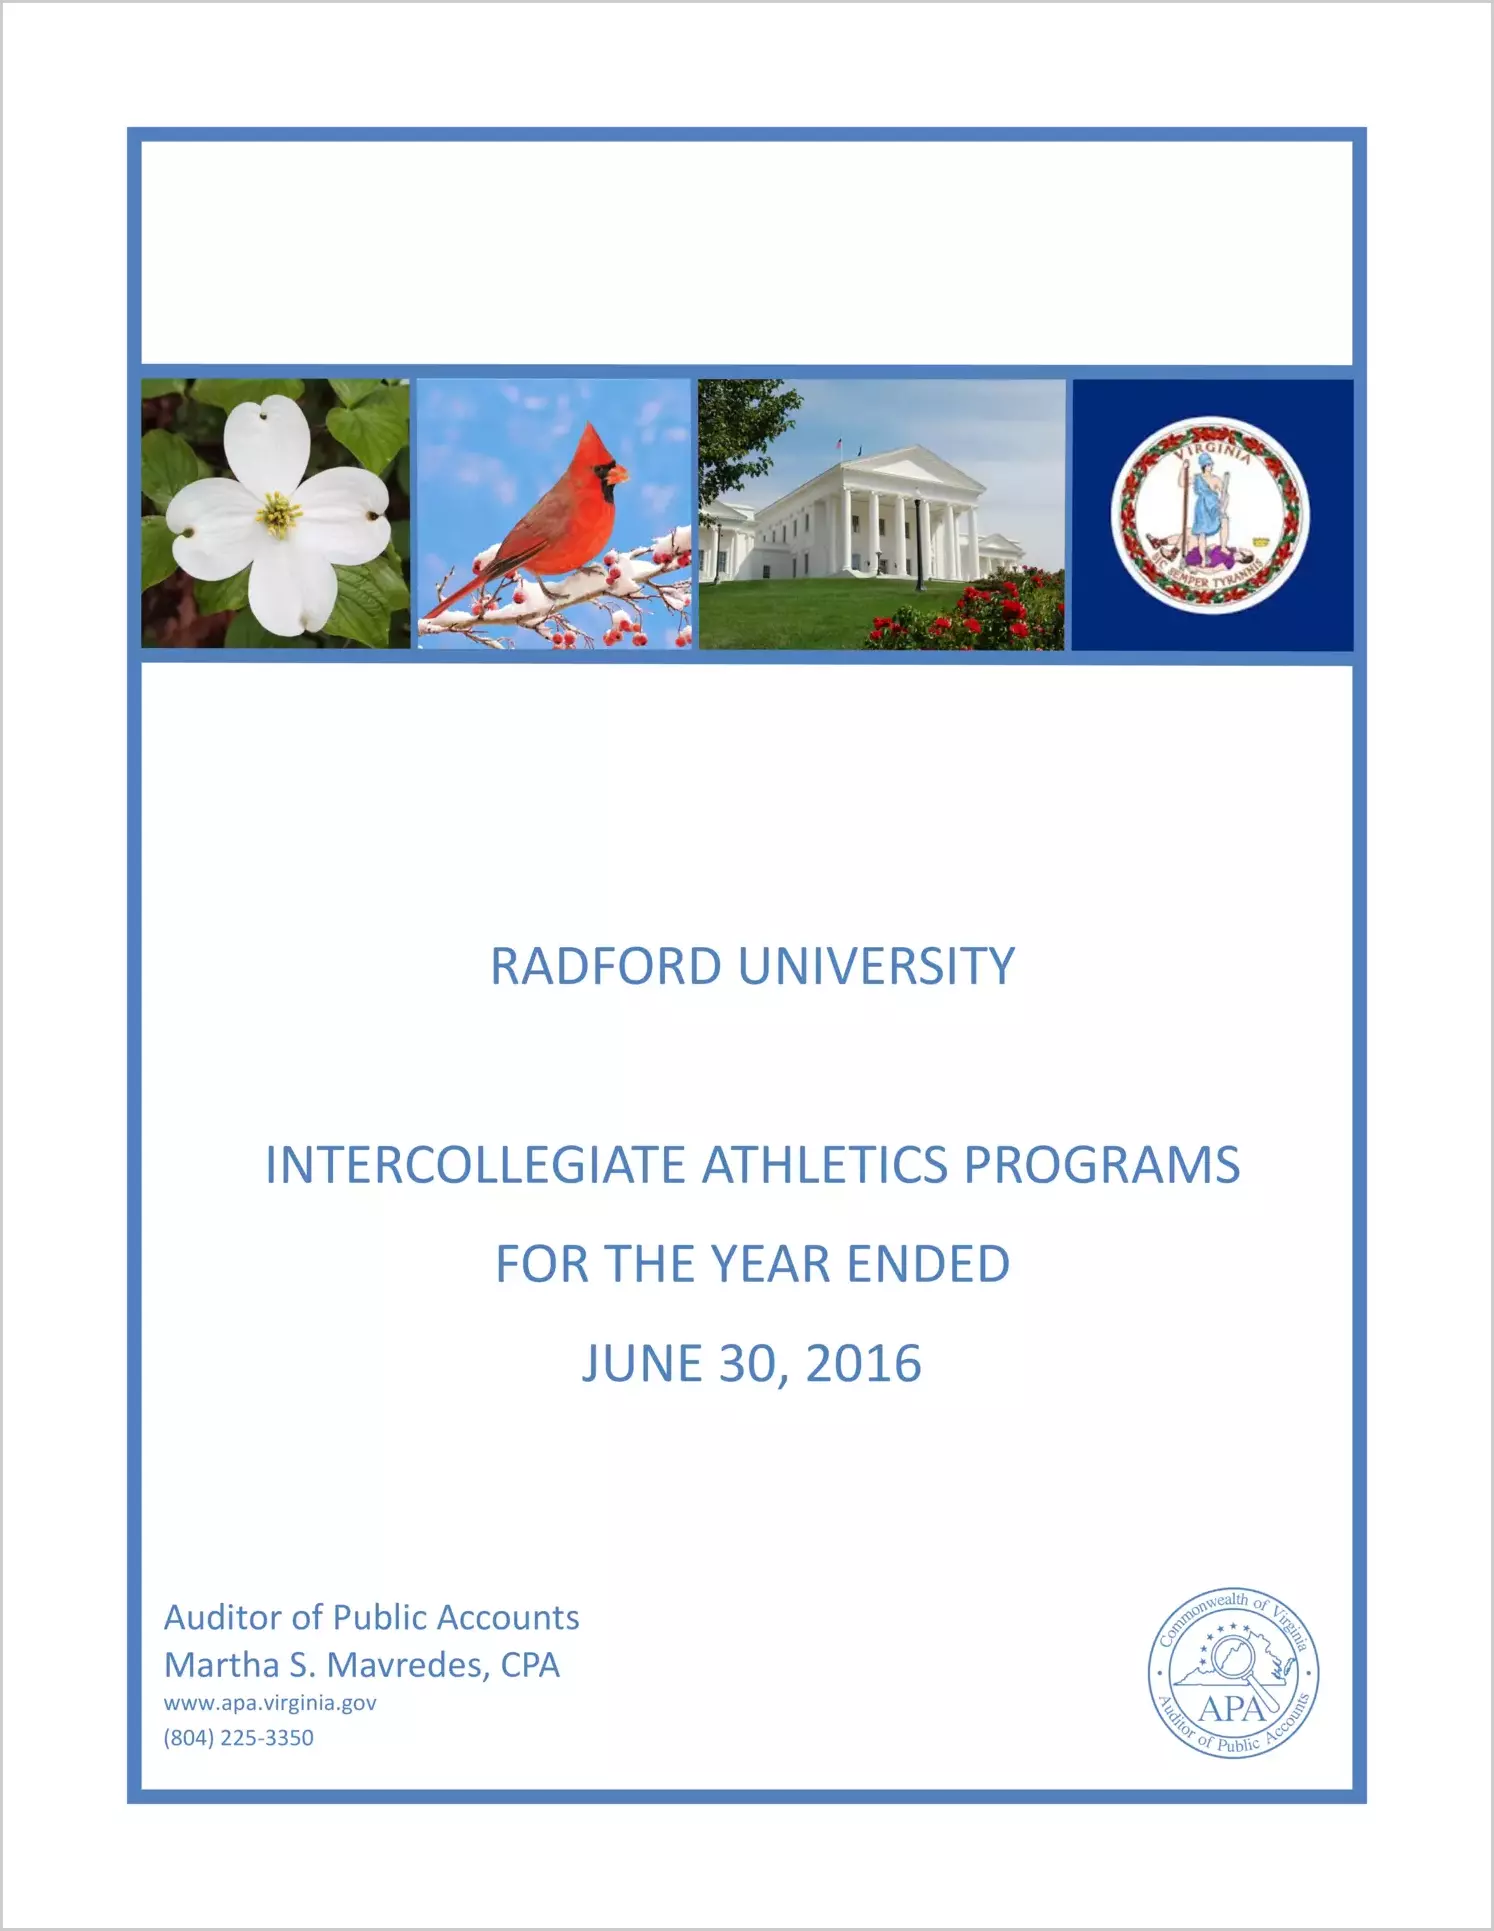 Radford University Intercollegiate Athletics Programs for the year ended June 30, 2016